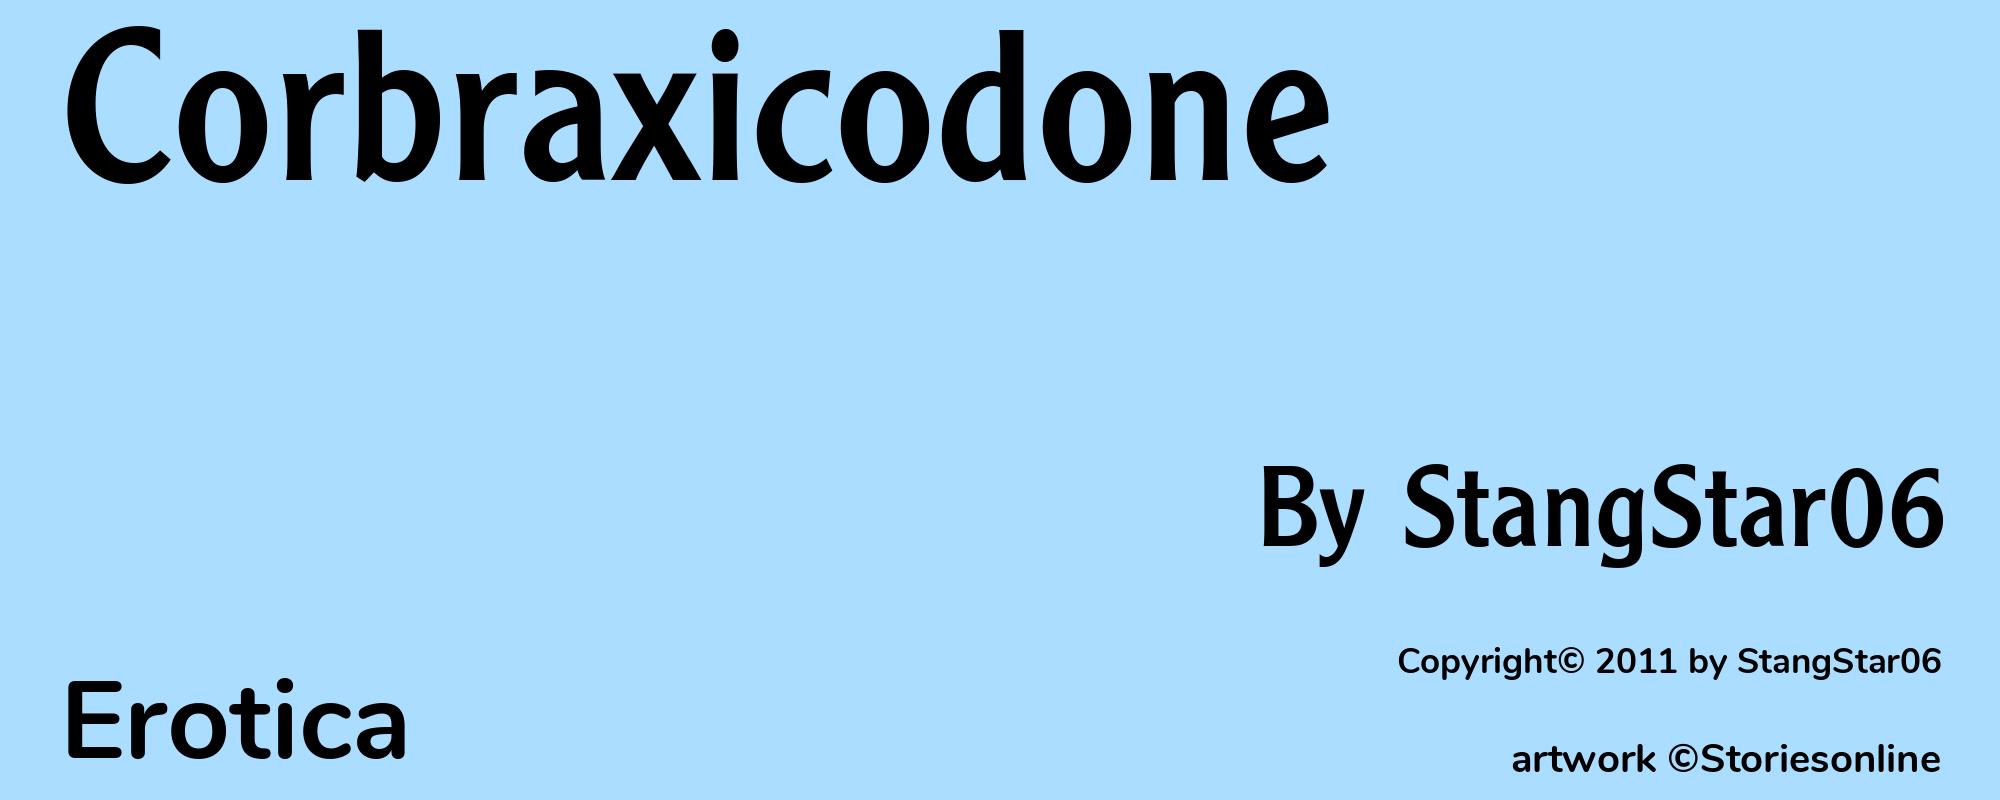 Corbraxicodone - Cover